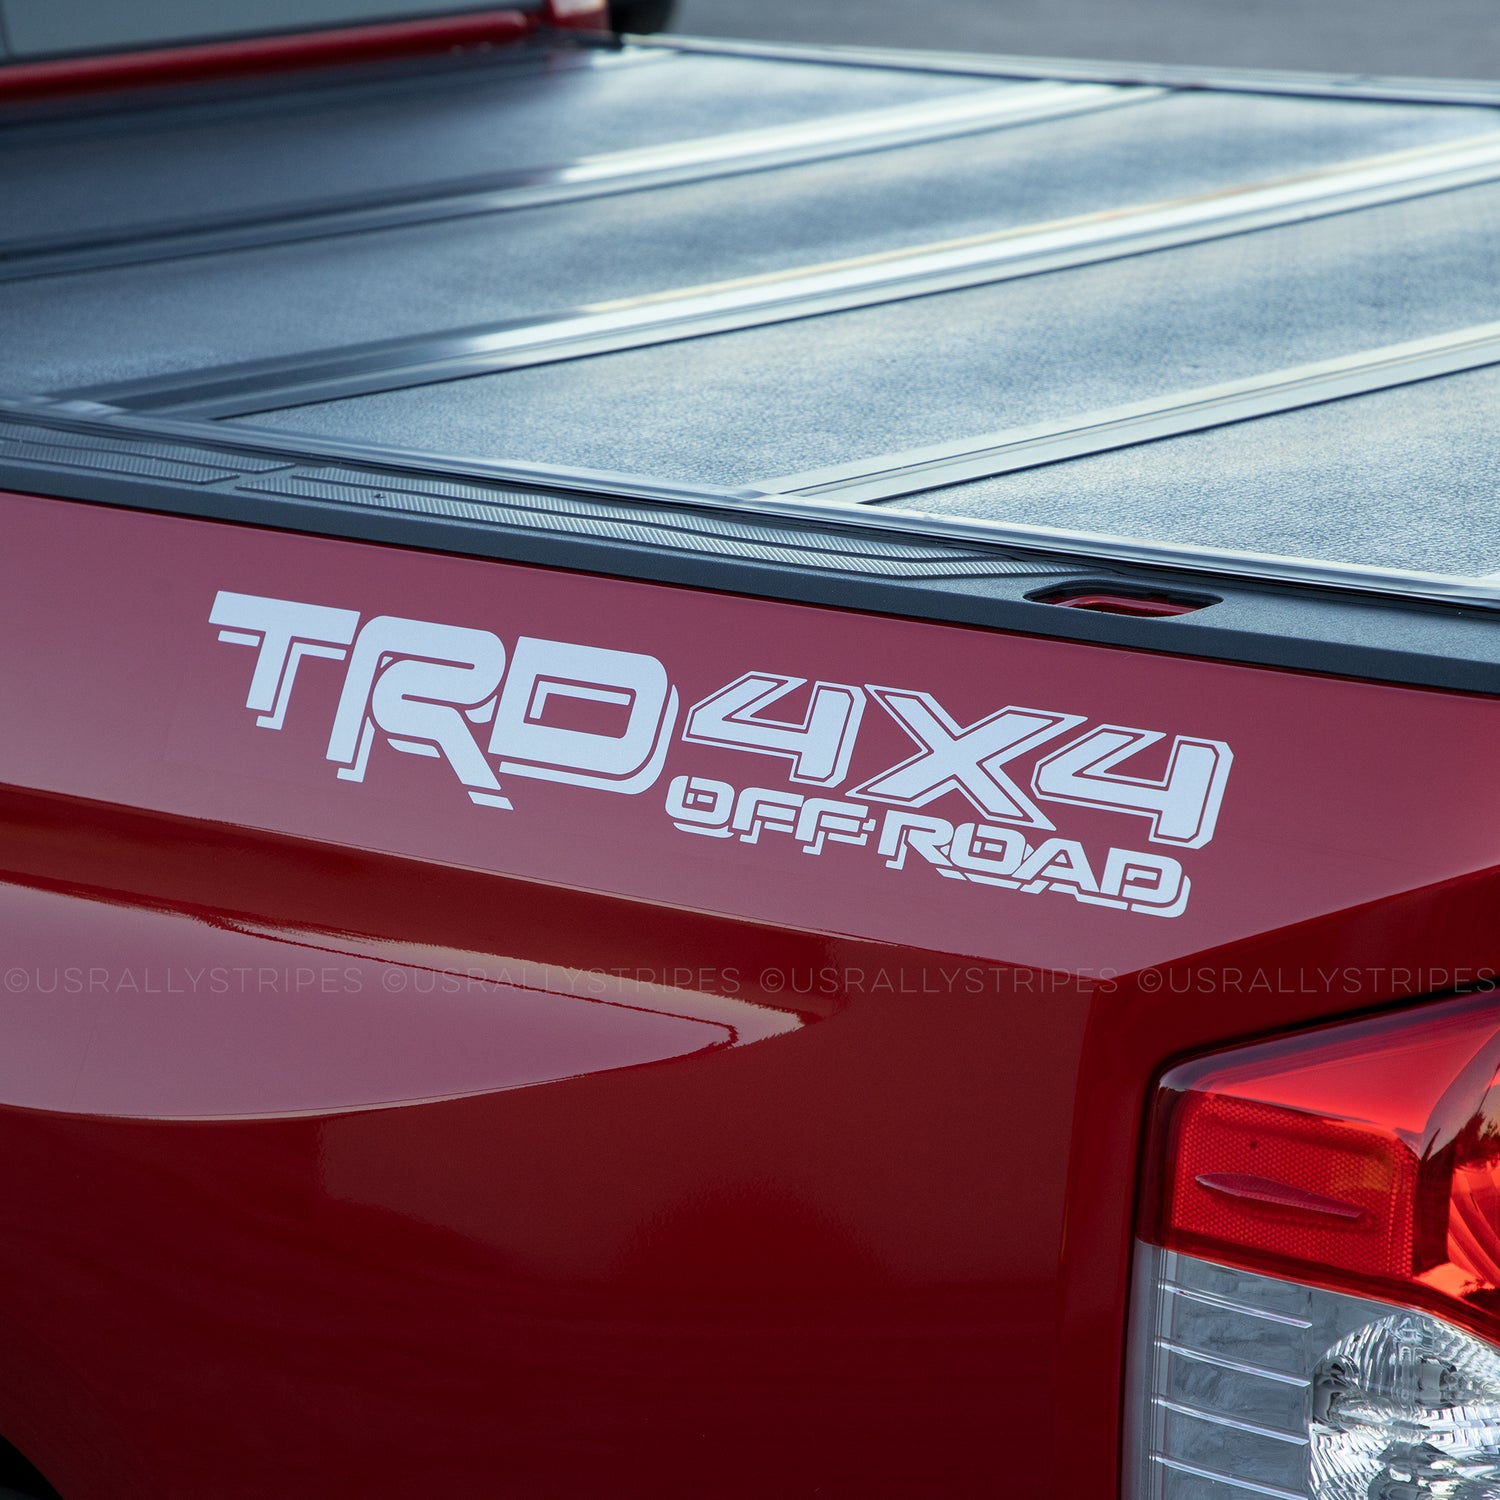 TRD 4x4 off-road decal on Toyota Tundra - Silver grey metallic